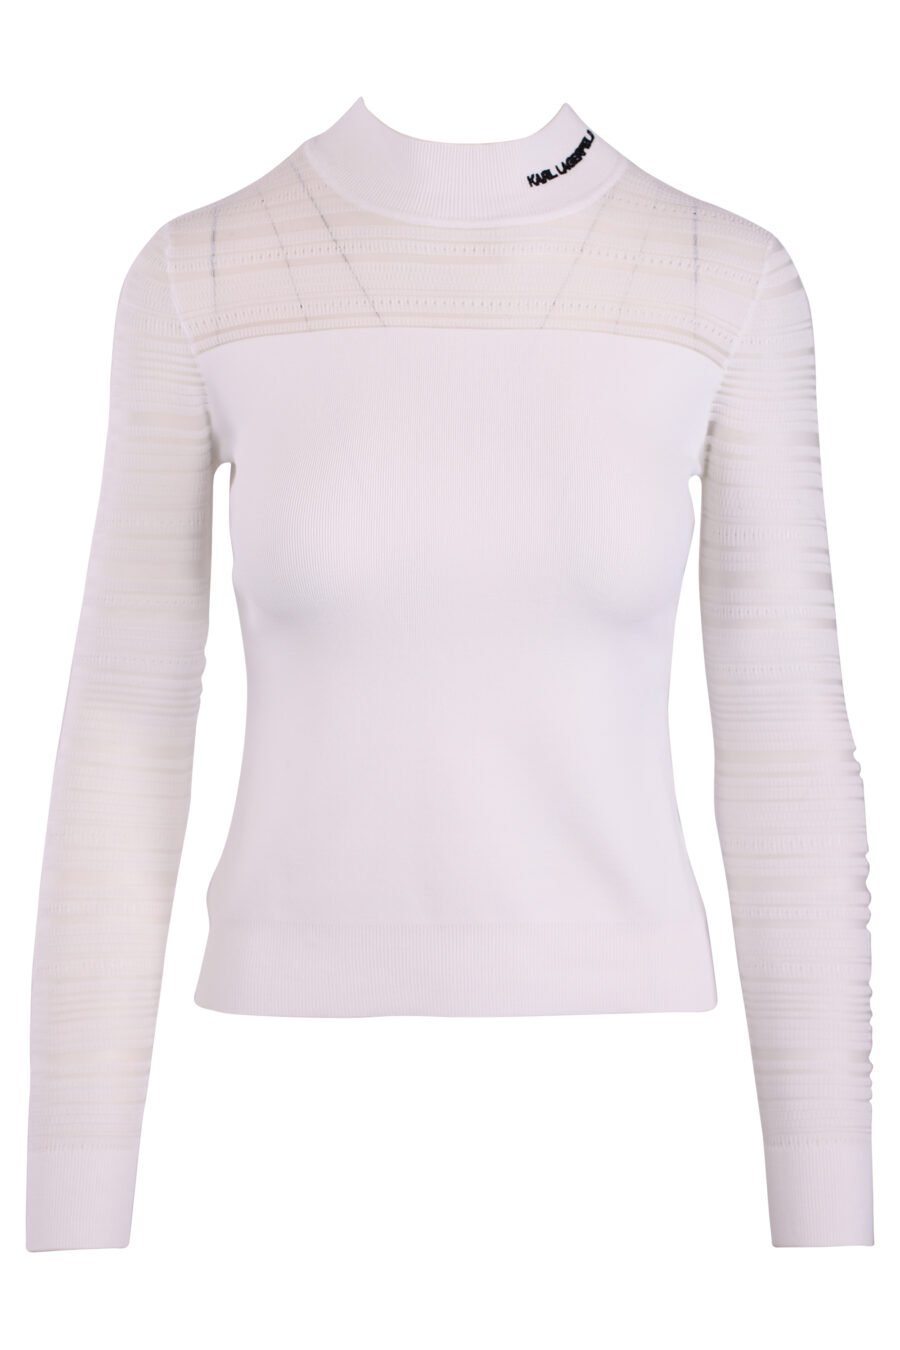 T-shirt blanc semi-transparent à manches longues - IMG 3261